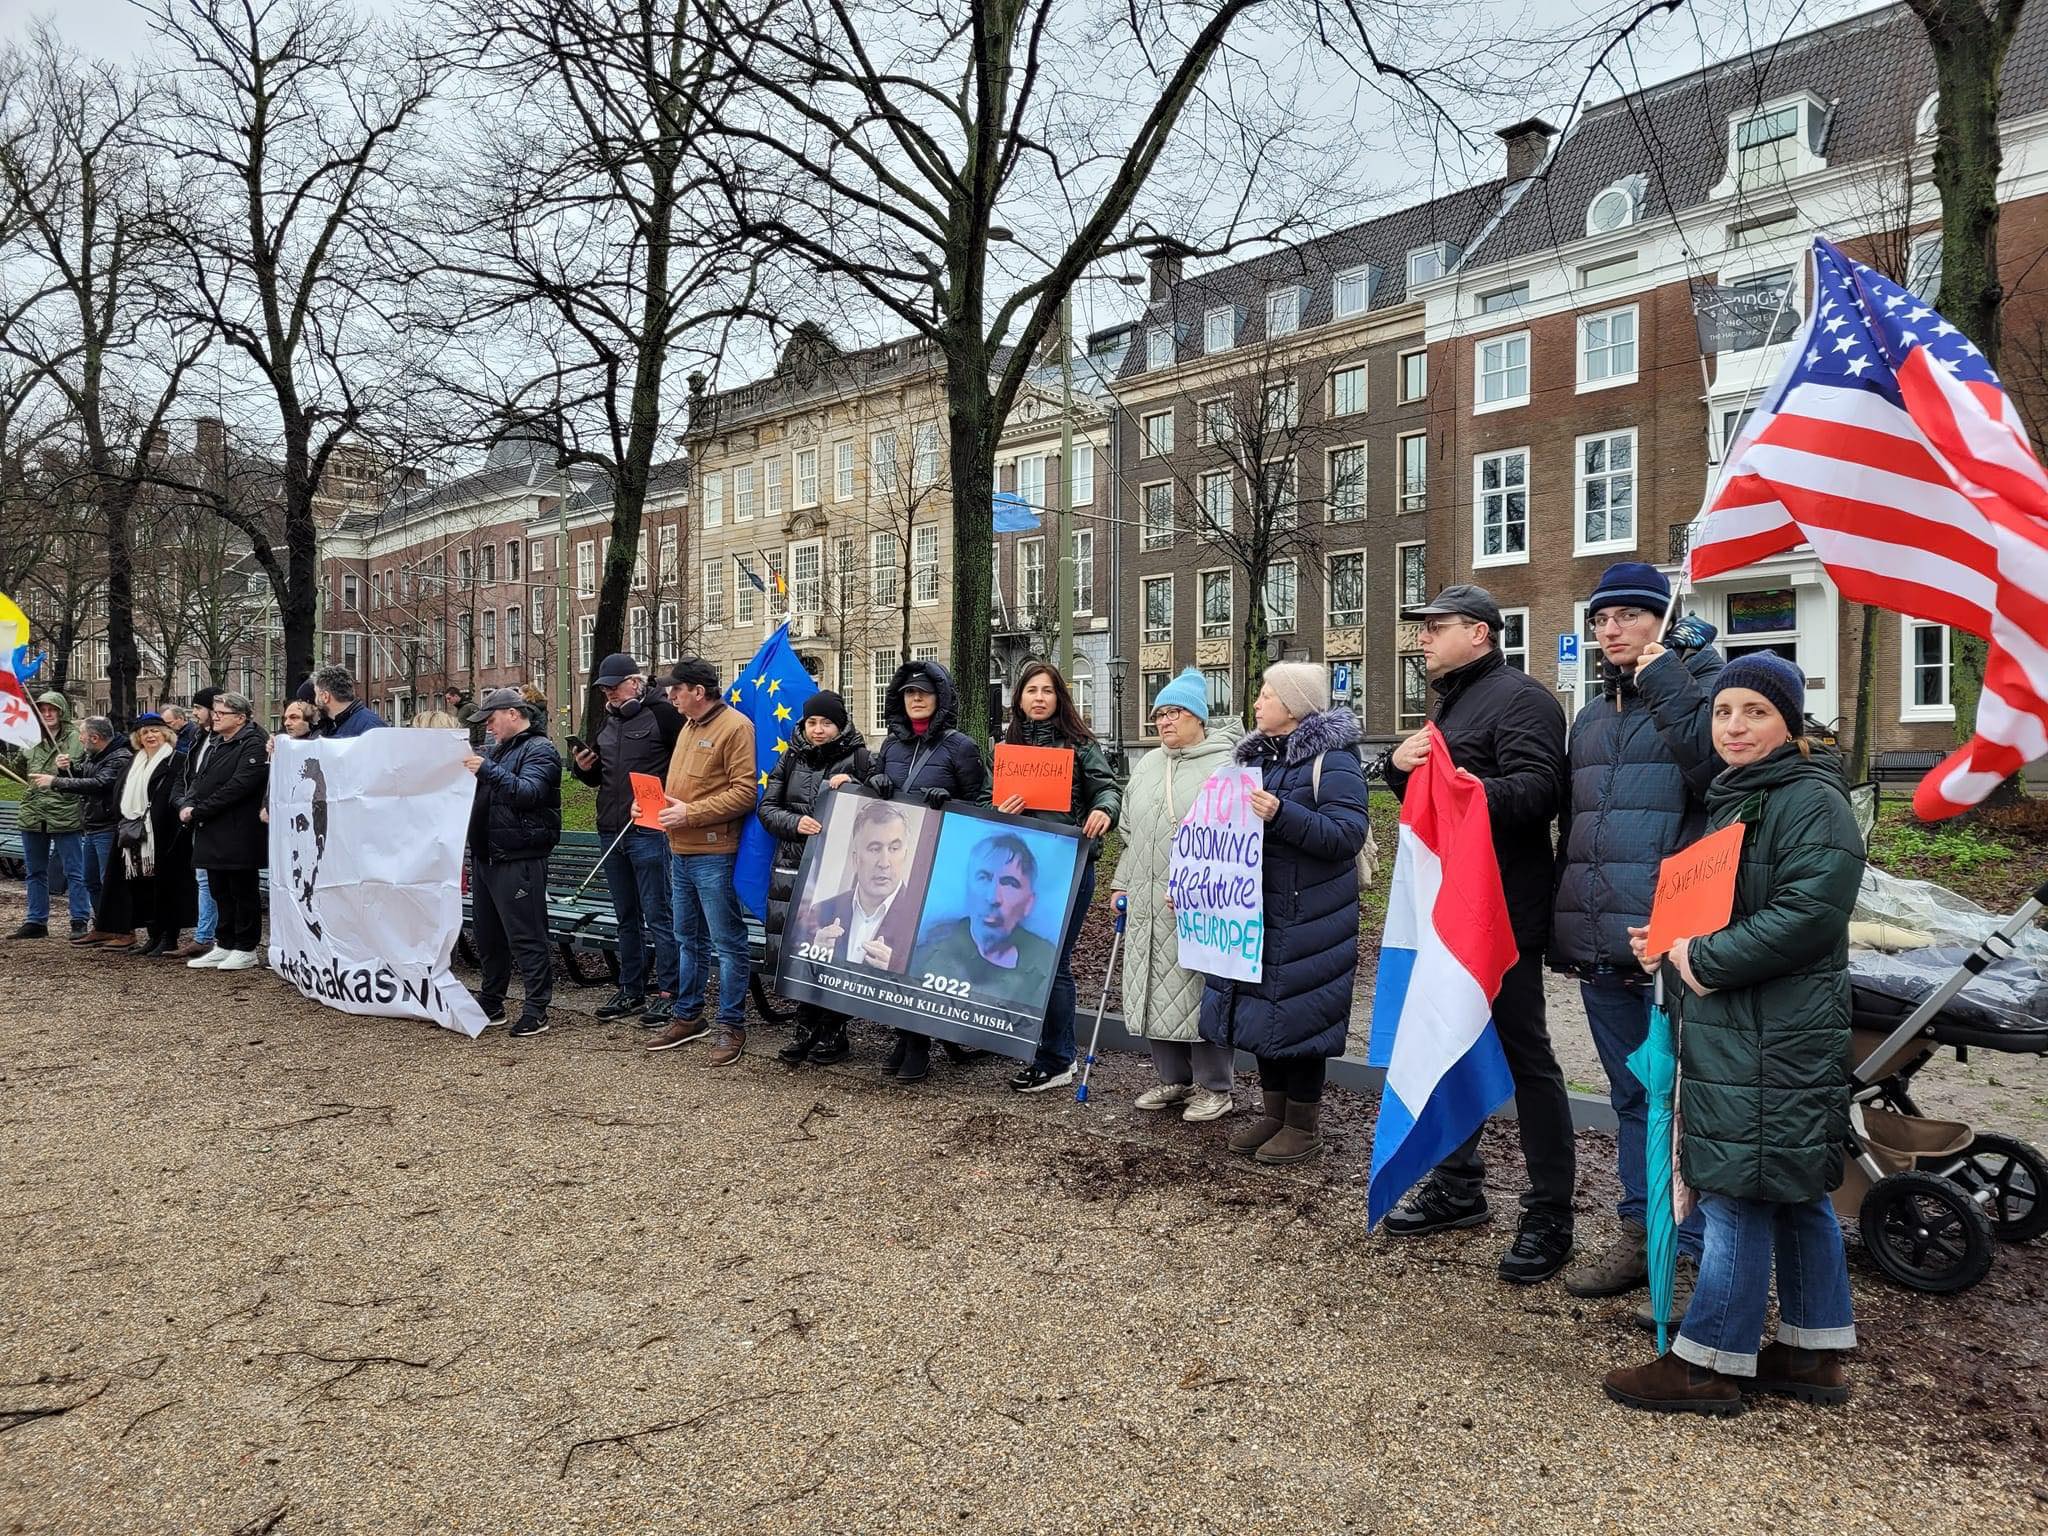 in support of Saakashvili.The Hague, Netherlands